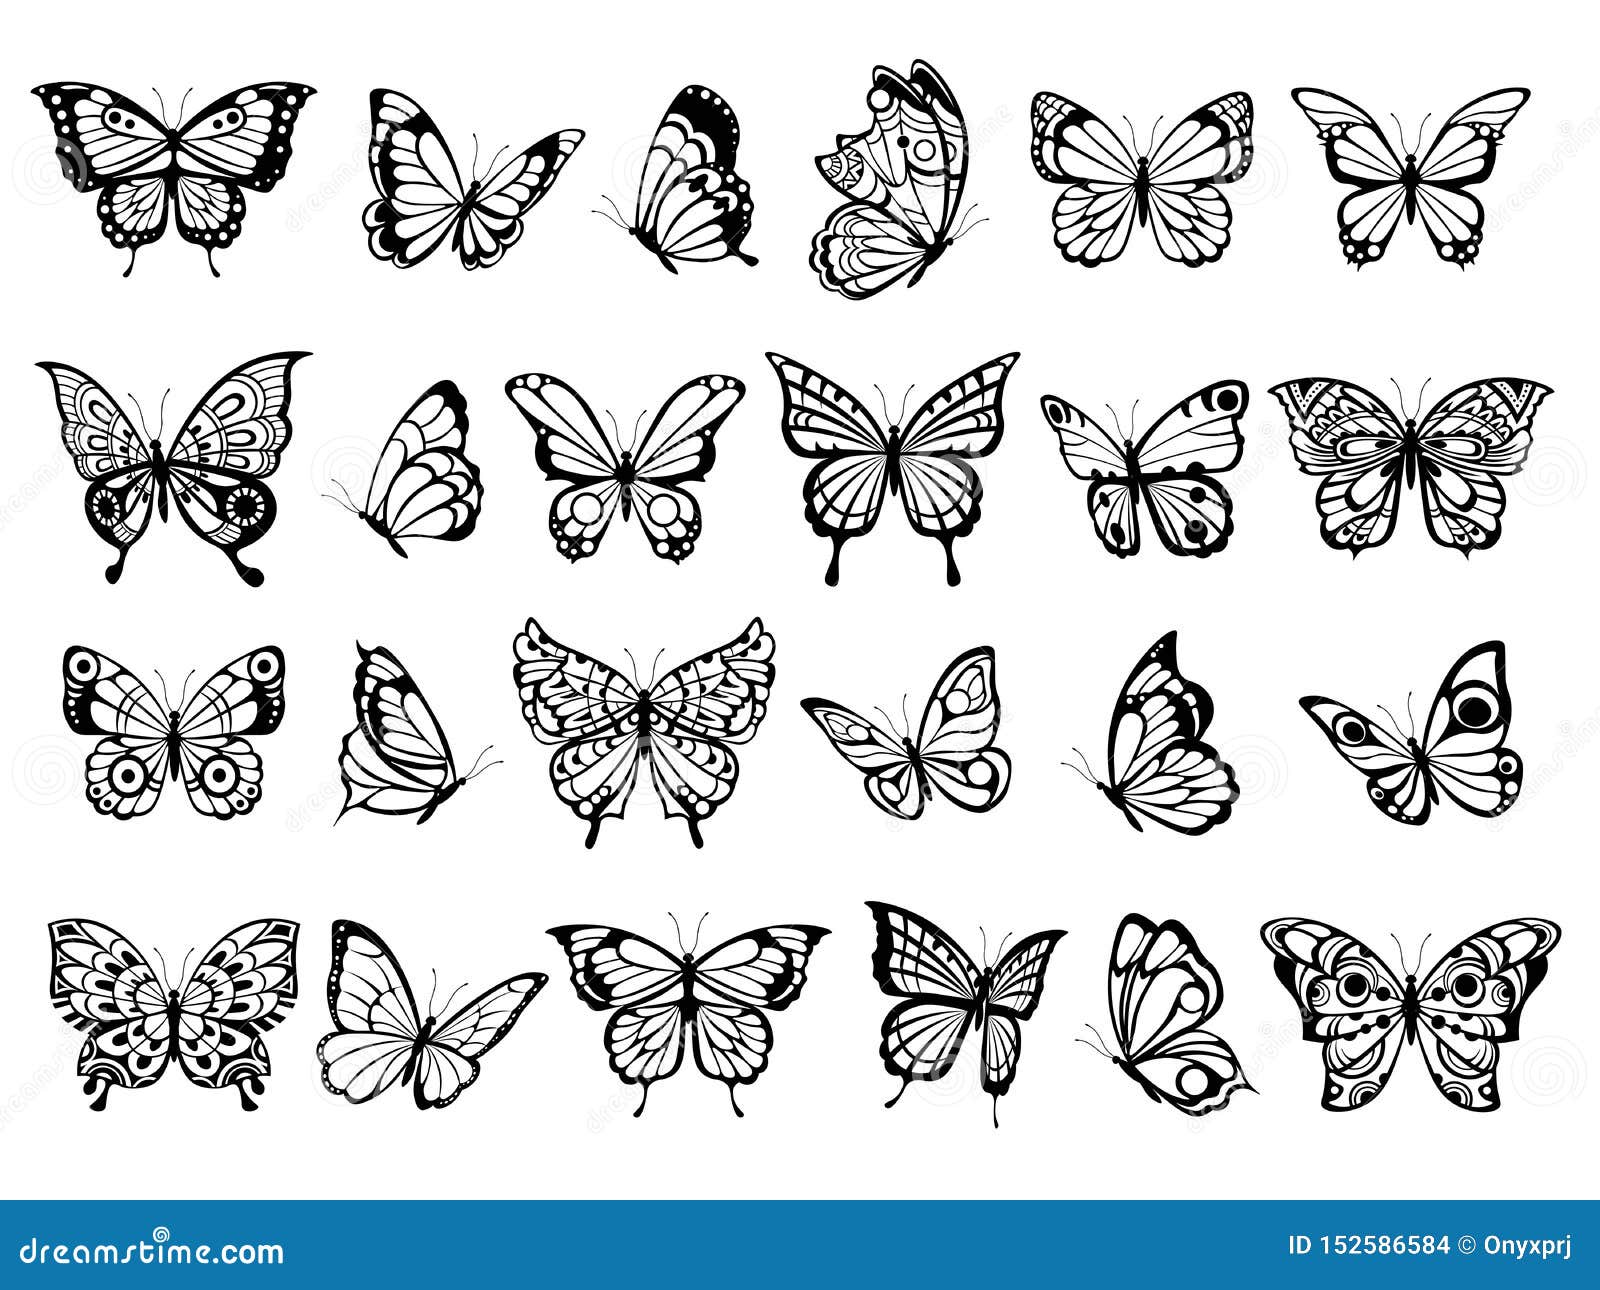 40 Beautiful Simple Butterfly Drawings In Pencil - Hobby Lesson | Butterfly  drawing, Butterfly drawing images, Butterfly sketch